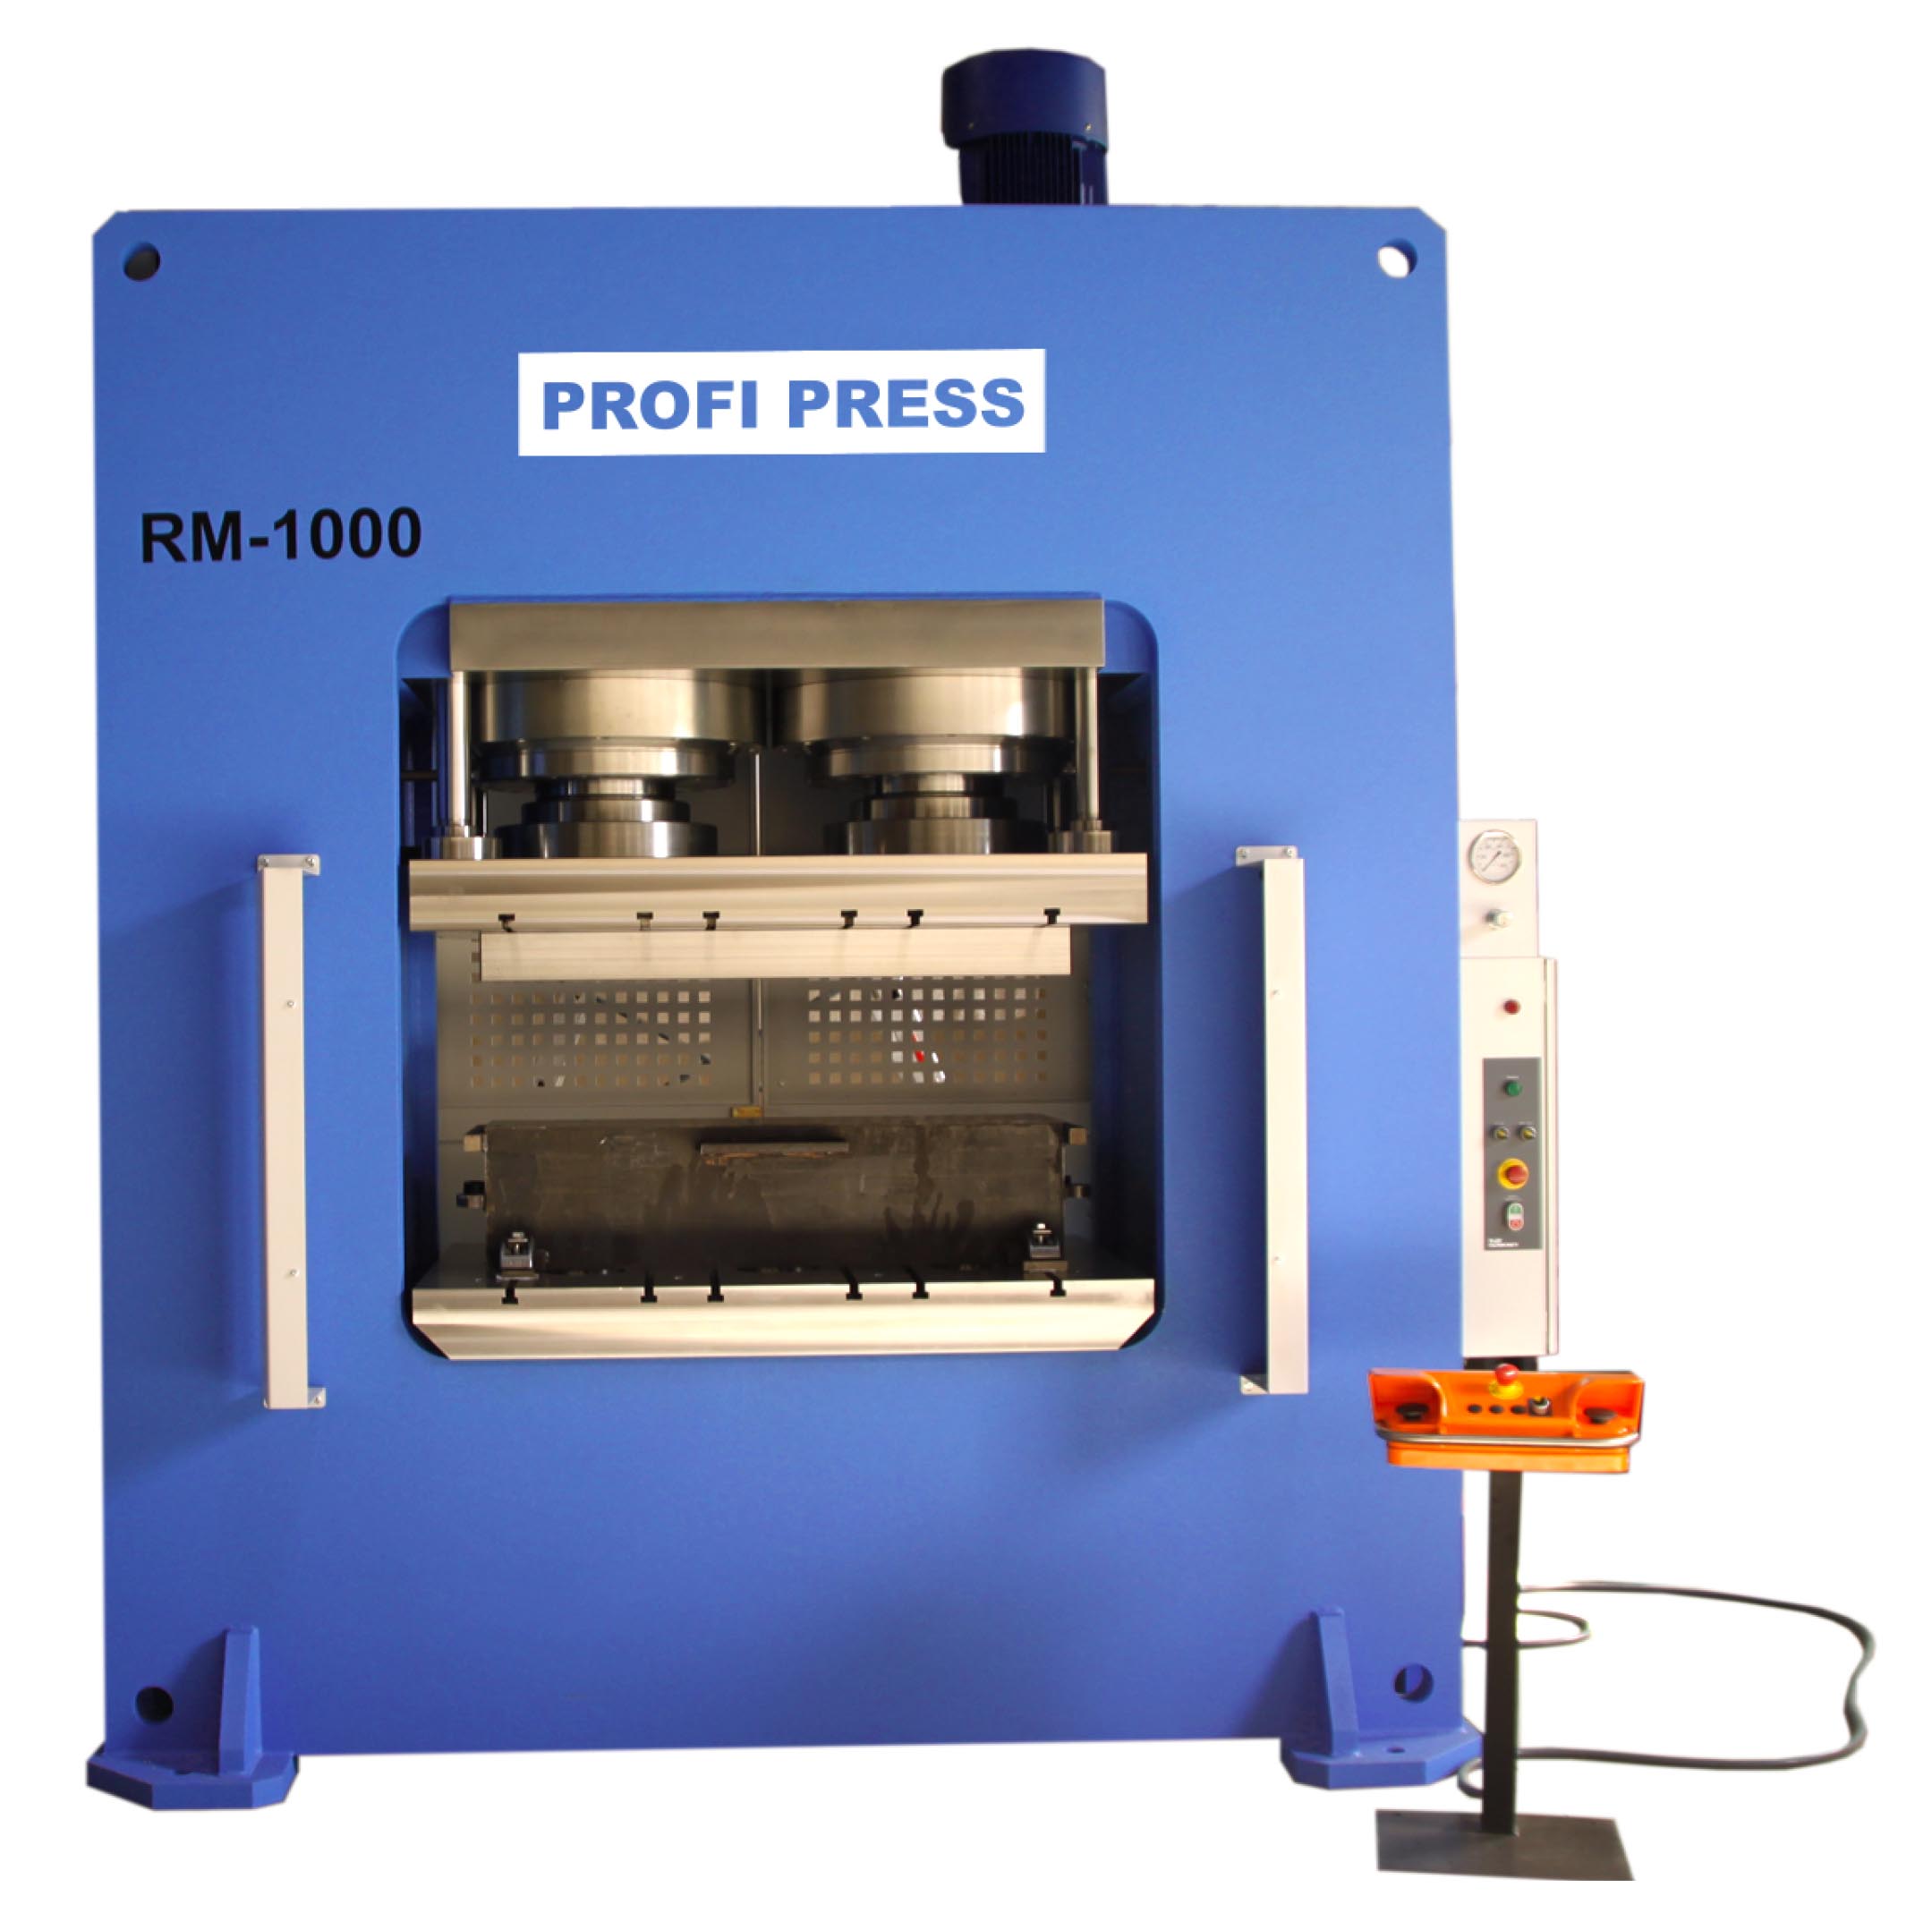 1000 TON production press | Profi high quality hydraulic presses RHTC